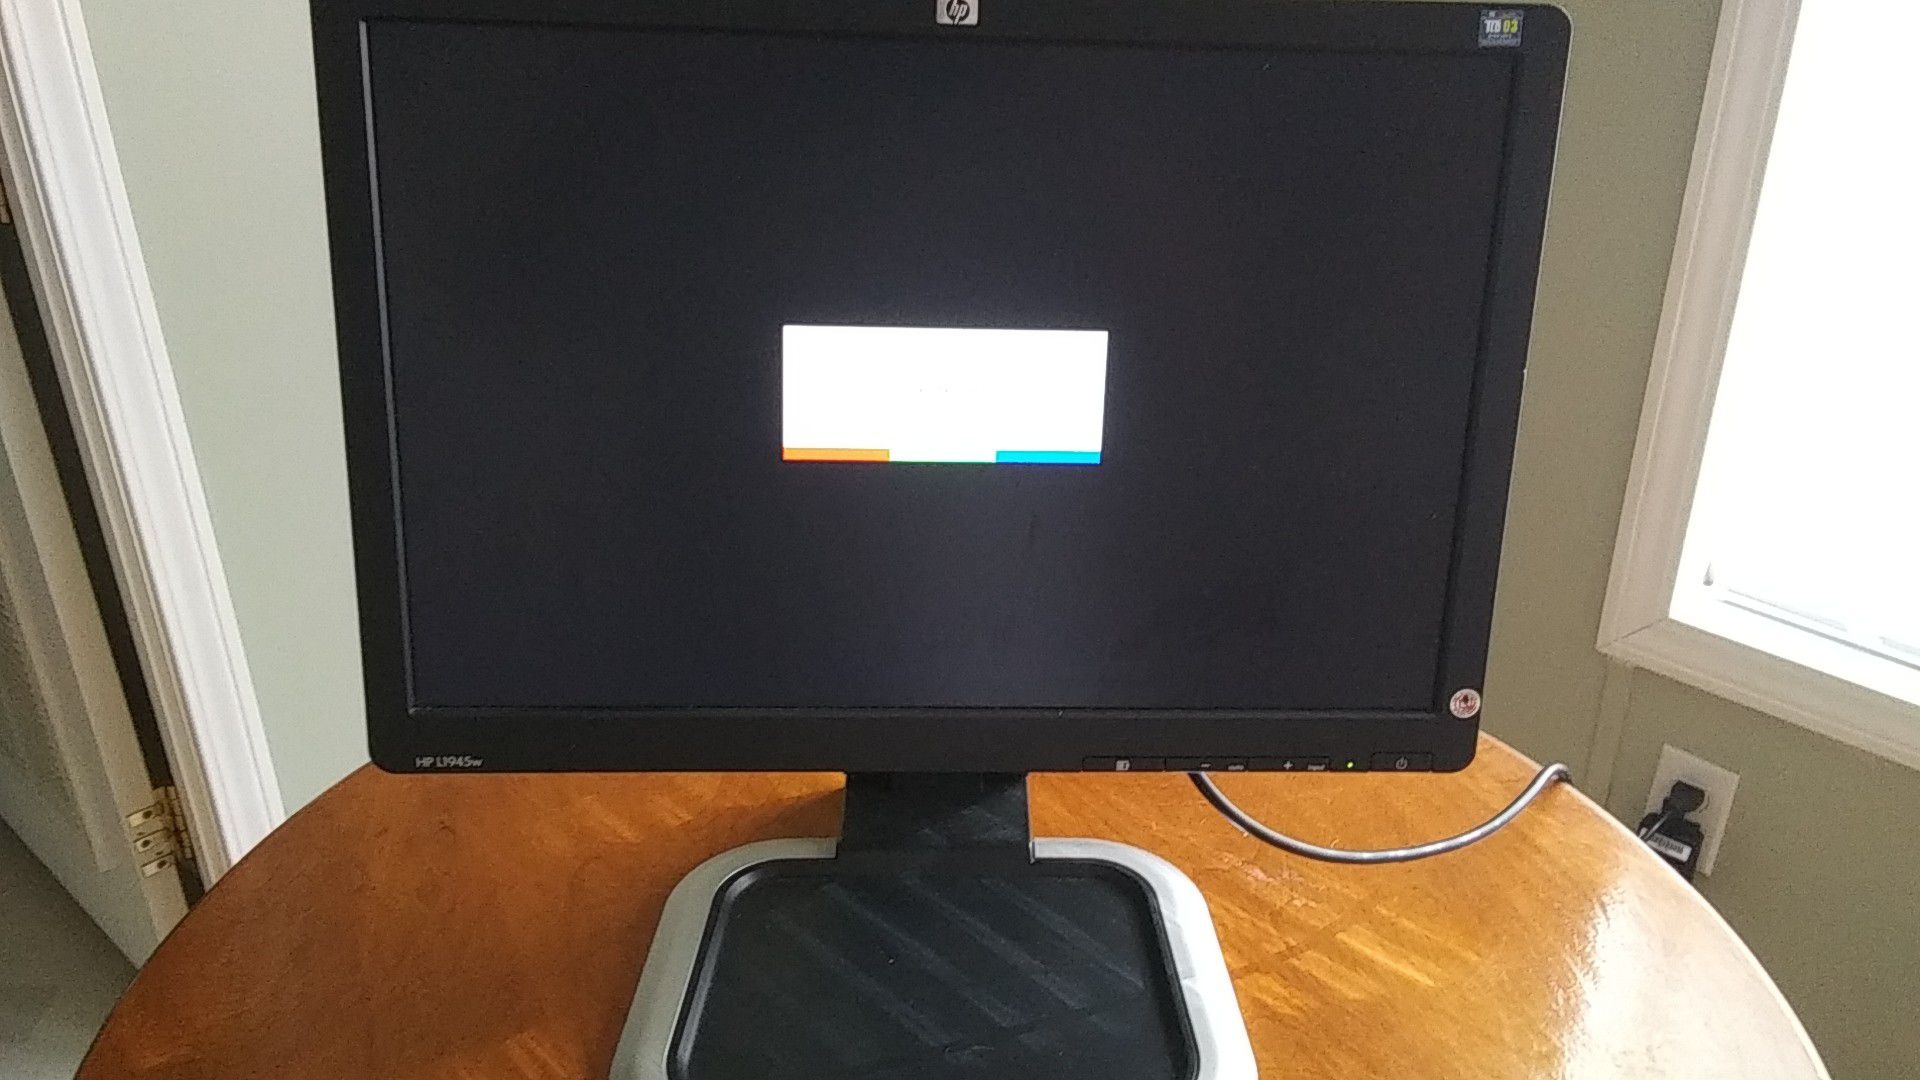 HP L1945w Computer Monitor